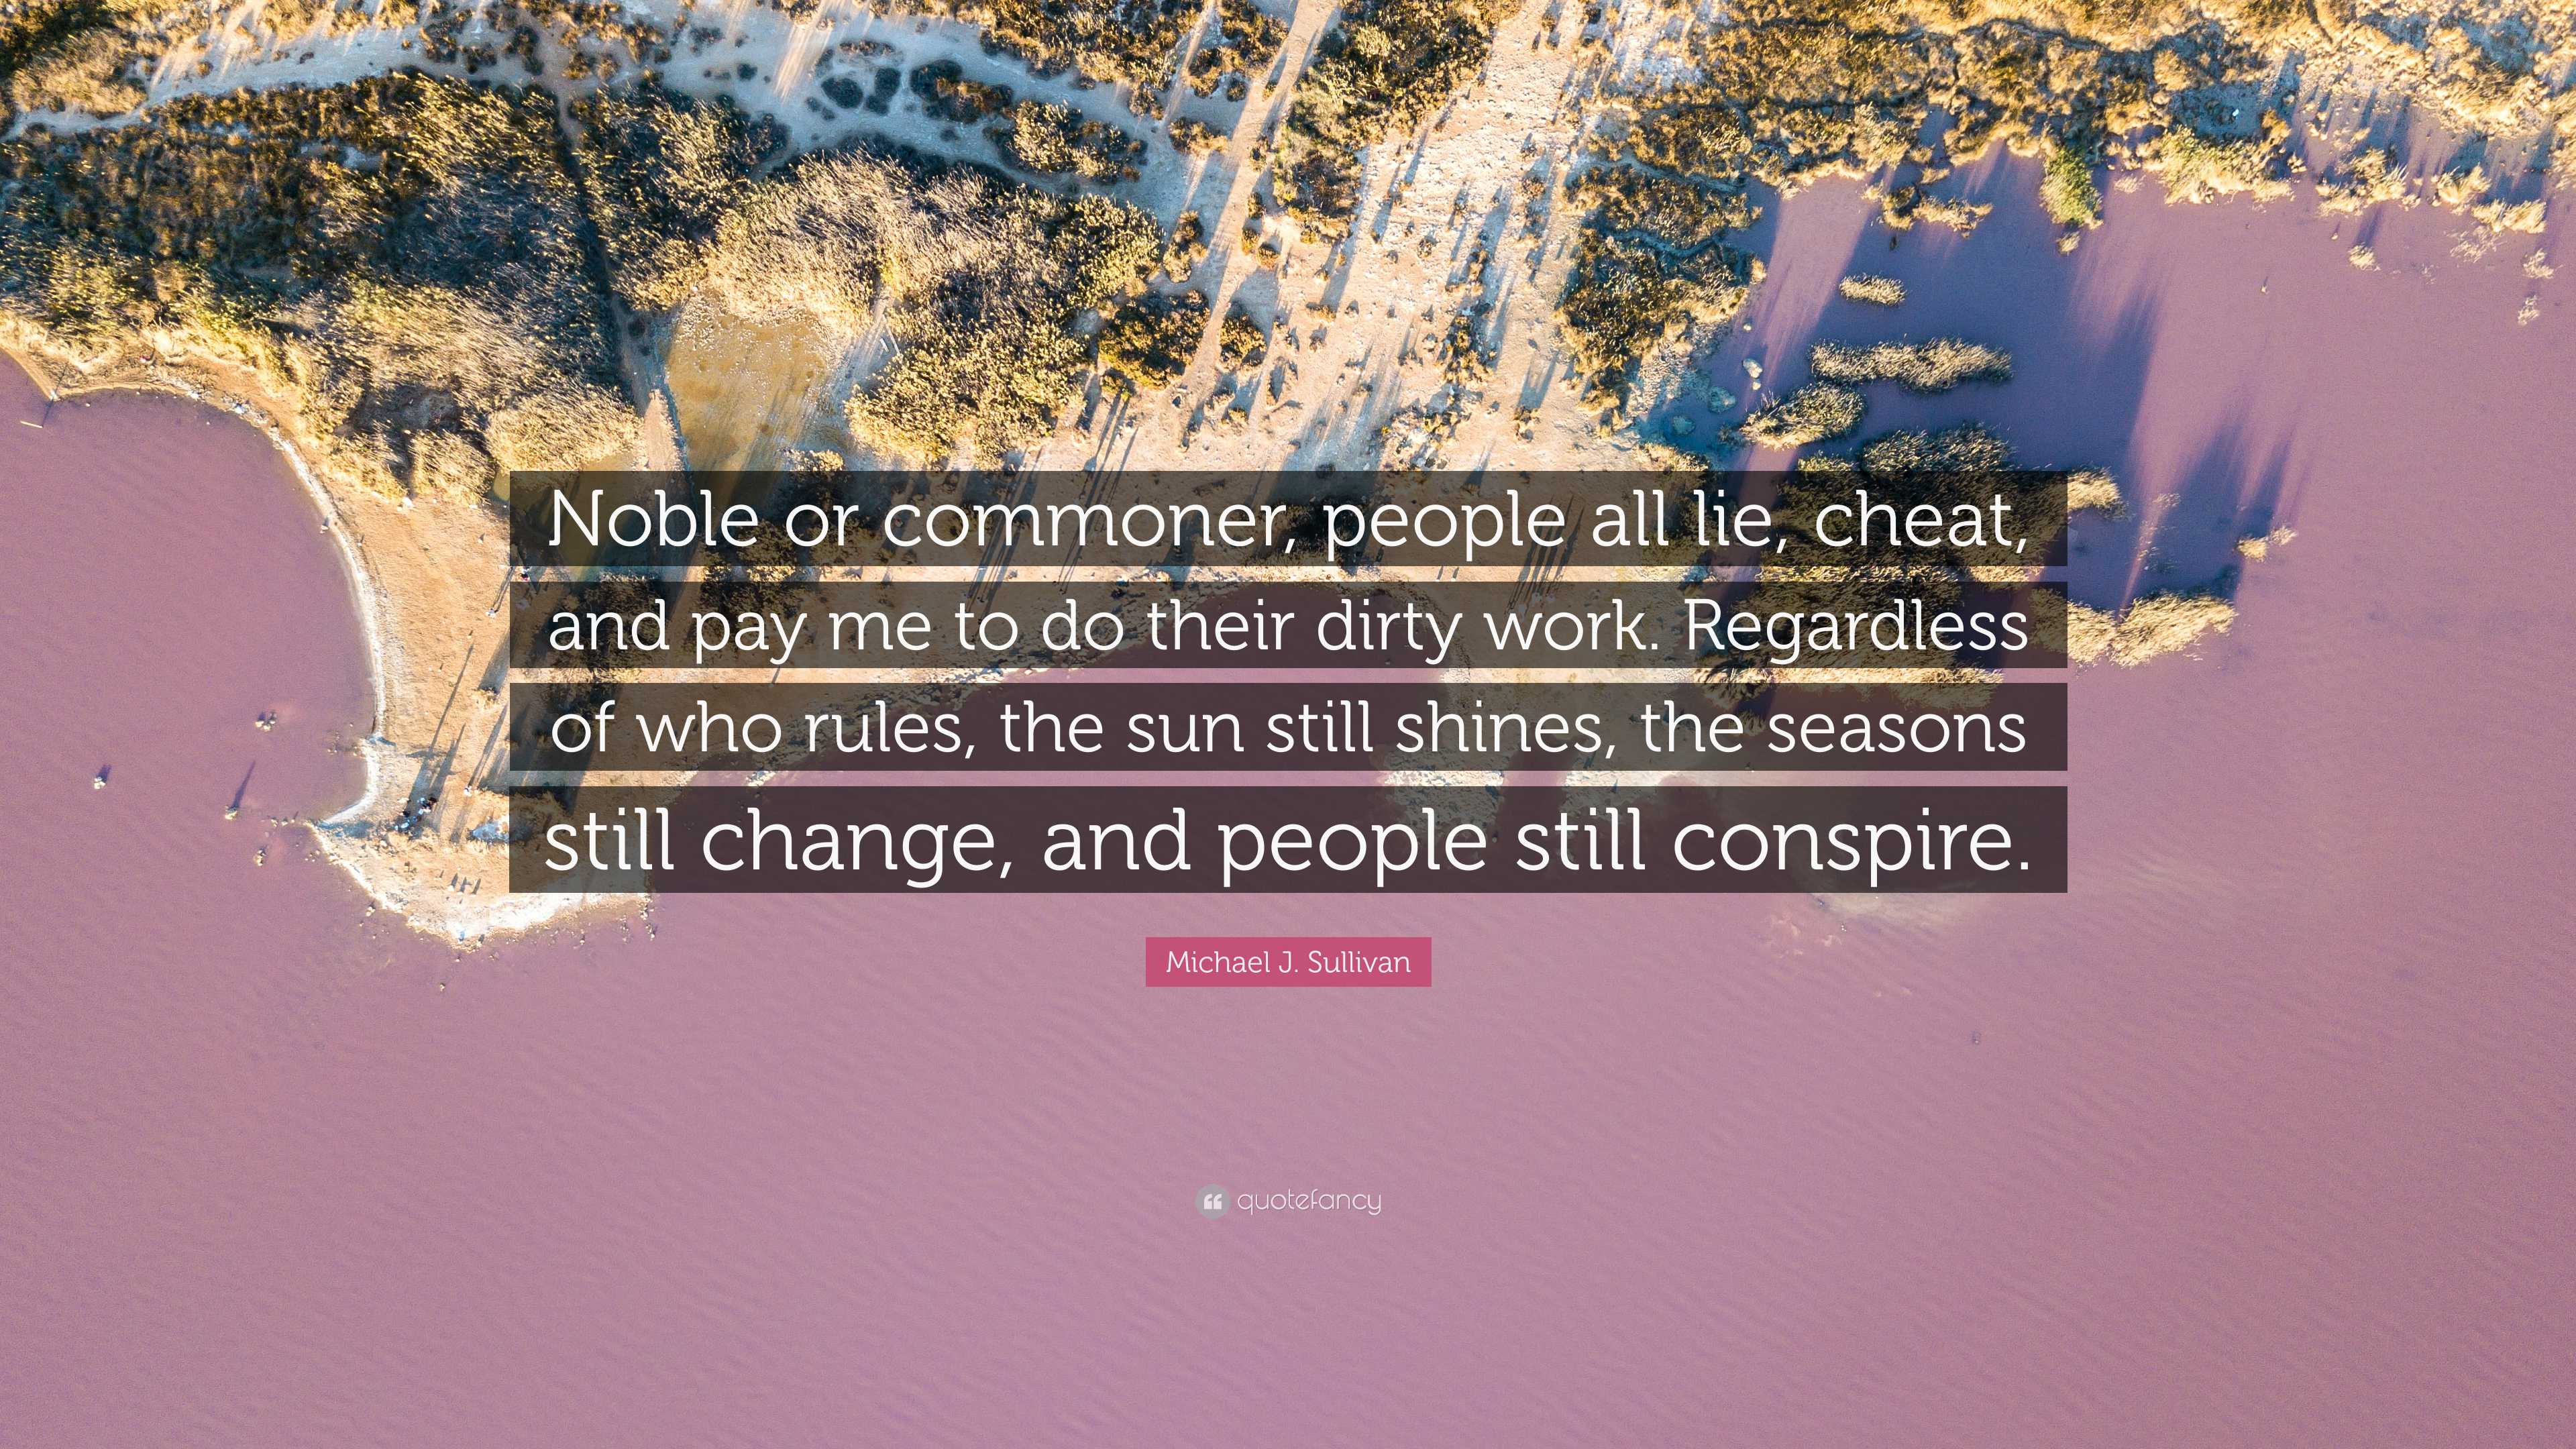 Michael J. Sullivan Quote: “Noble or commoner